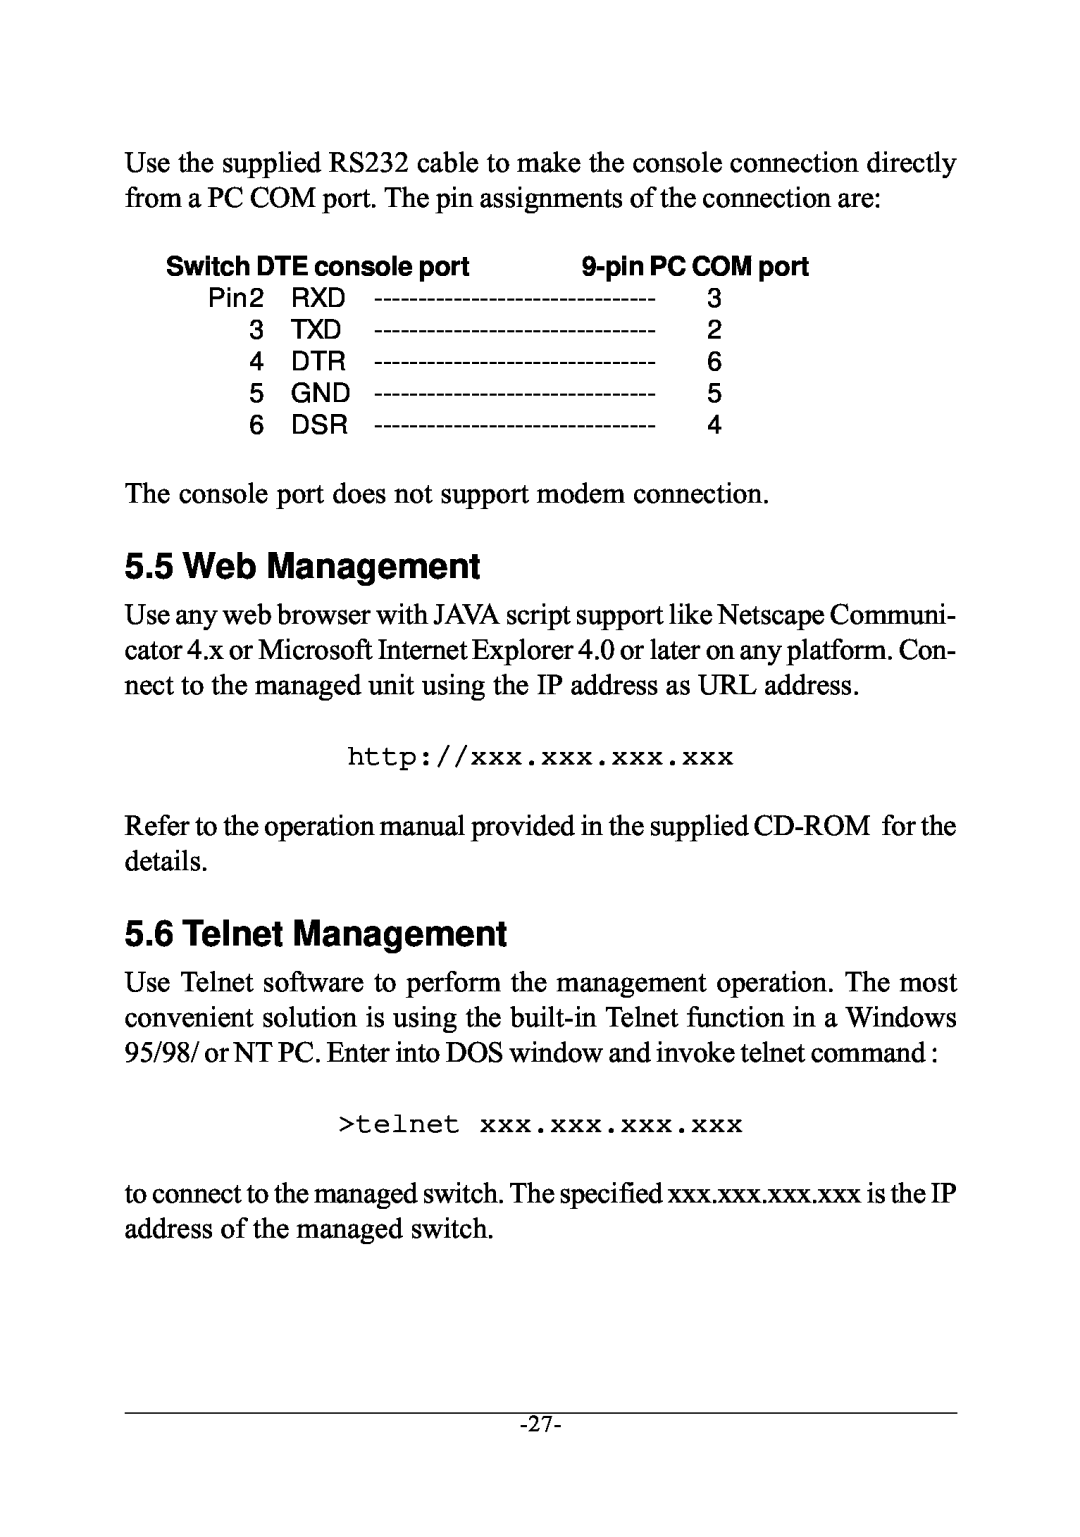 KTI Networks KS-801 manual Web Management, Telnet Management, http//xxx.xxx.xxx.xxx, telnet 